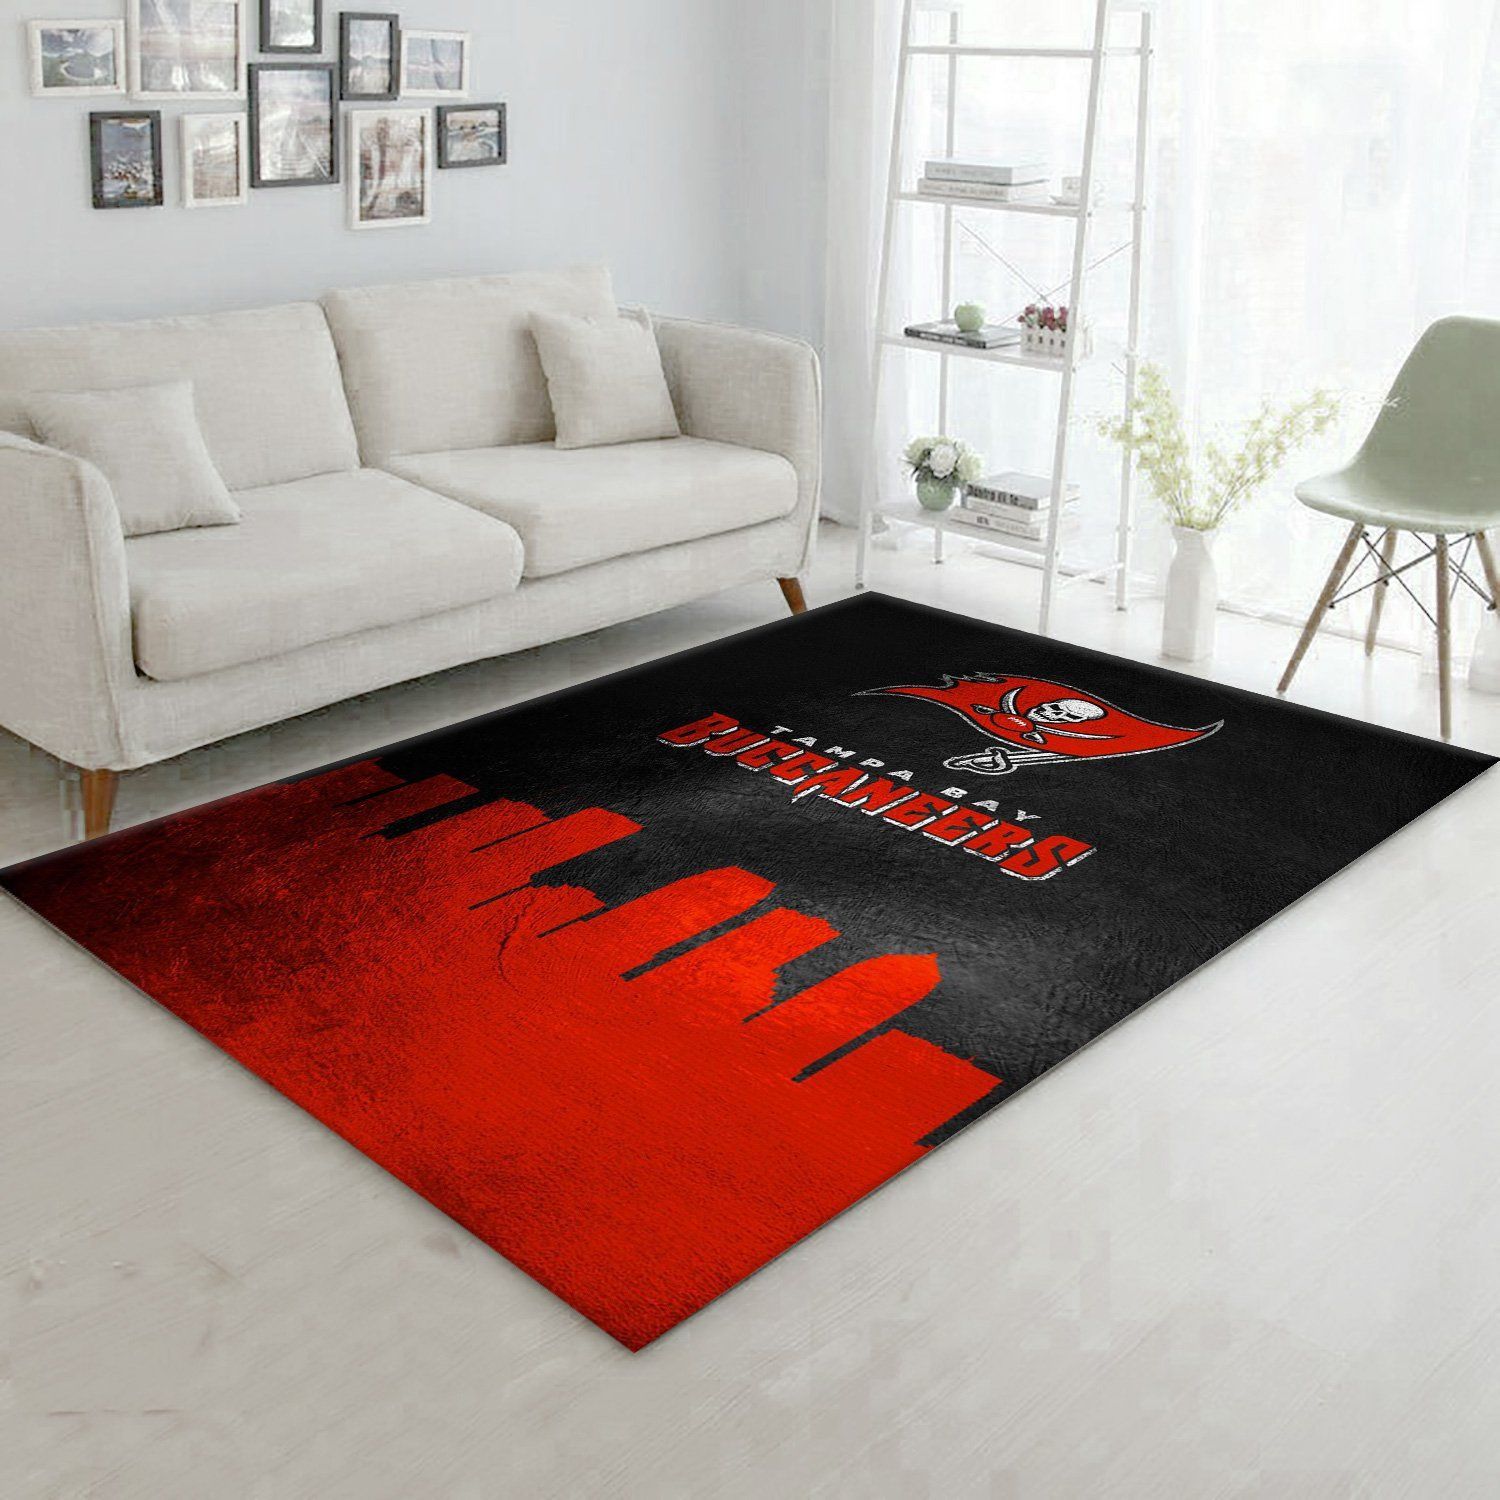 Tampa Bay Buccaneers NFL football fan Floor home decoration carpet rug